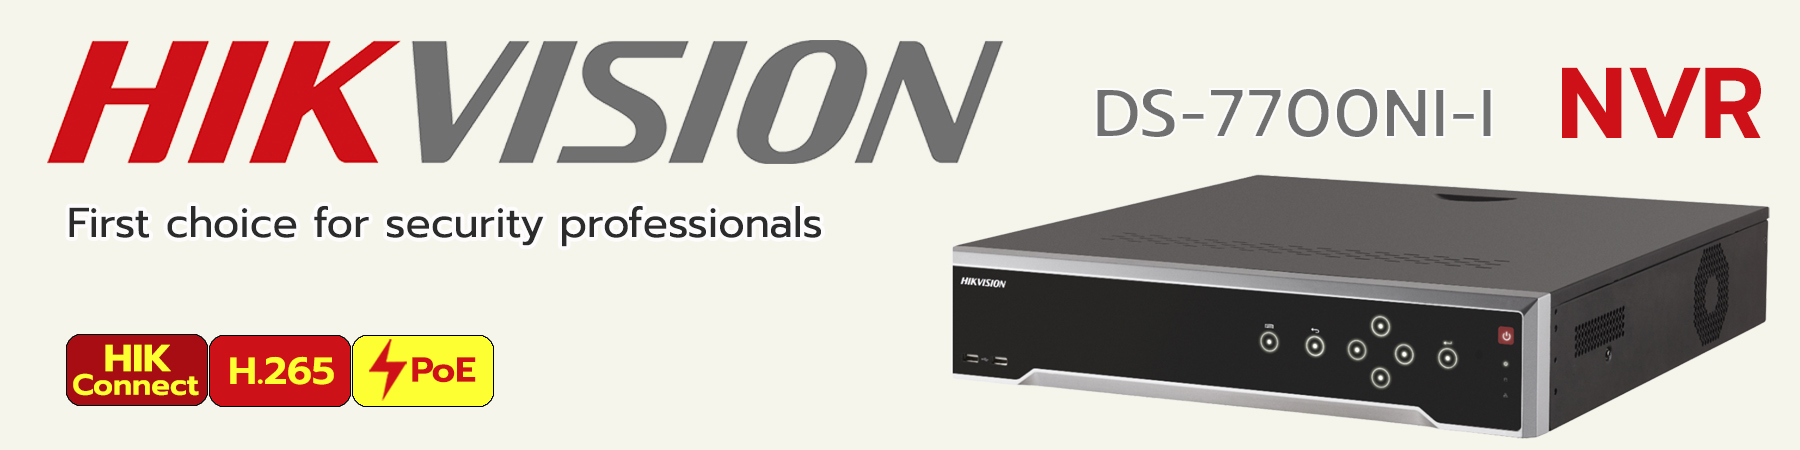 Hikvision NVR, Hikvision Network Video Recorder, DS-7716NI-I4, DS-7716NI-I4/16P, DS-7732NI-I4, DS-7732NI-I4/16P, DS-7732NI-I4/24P